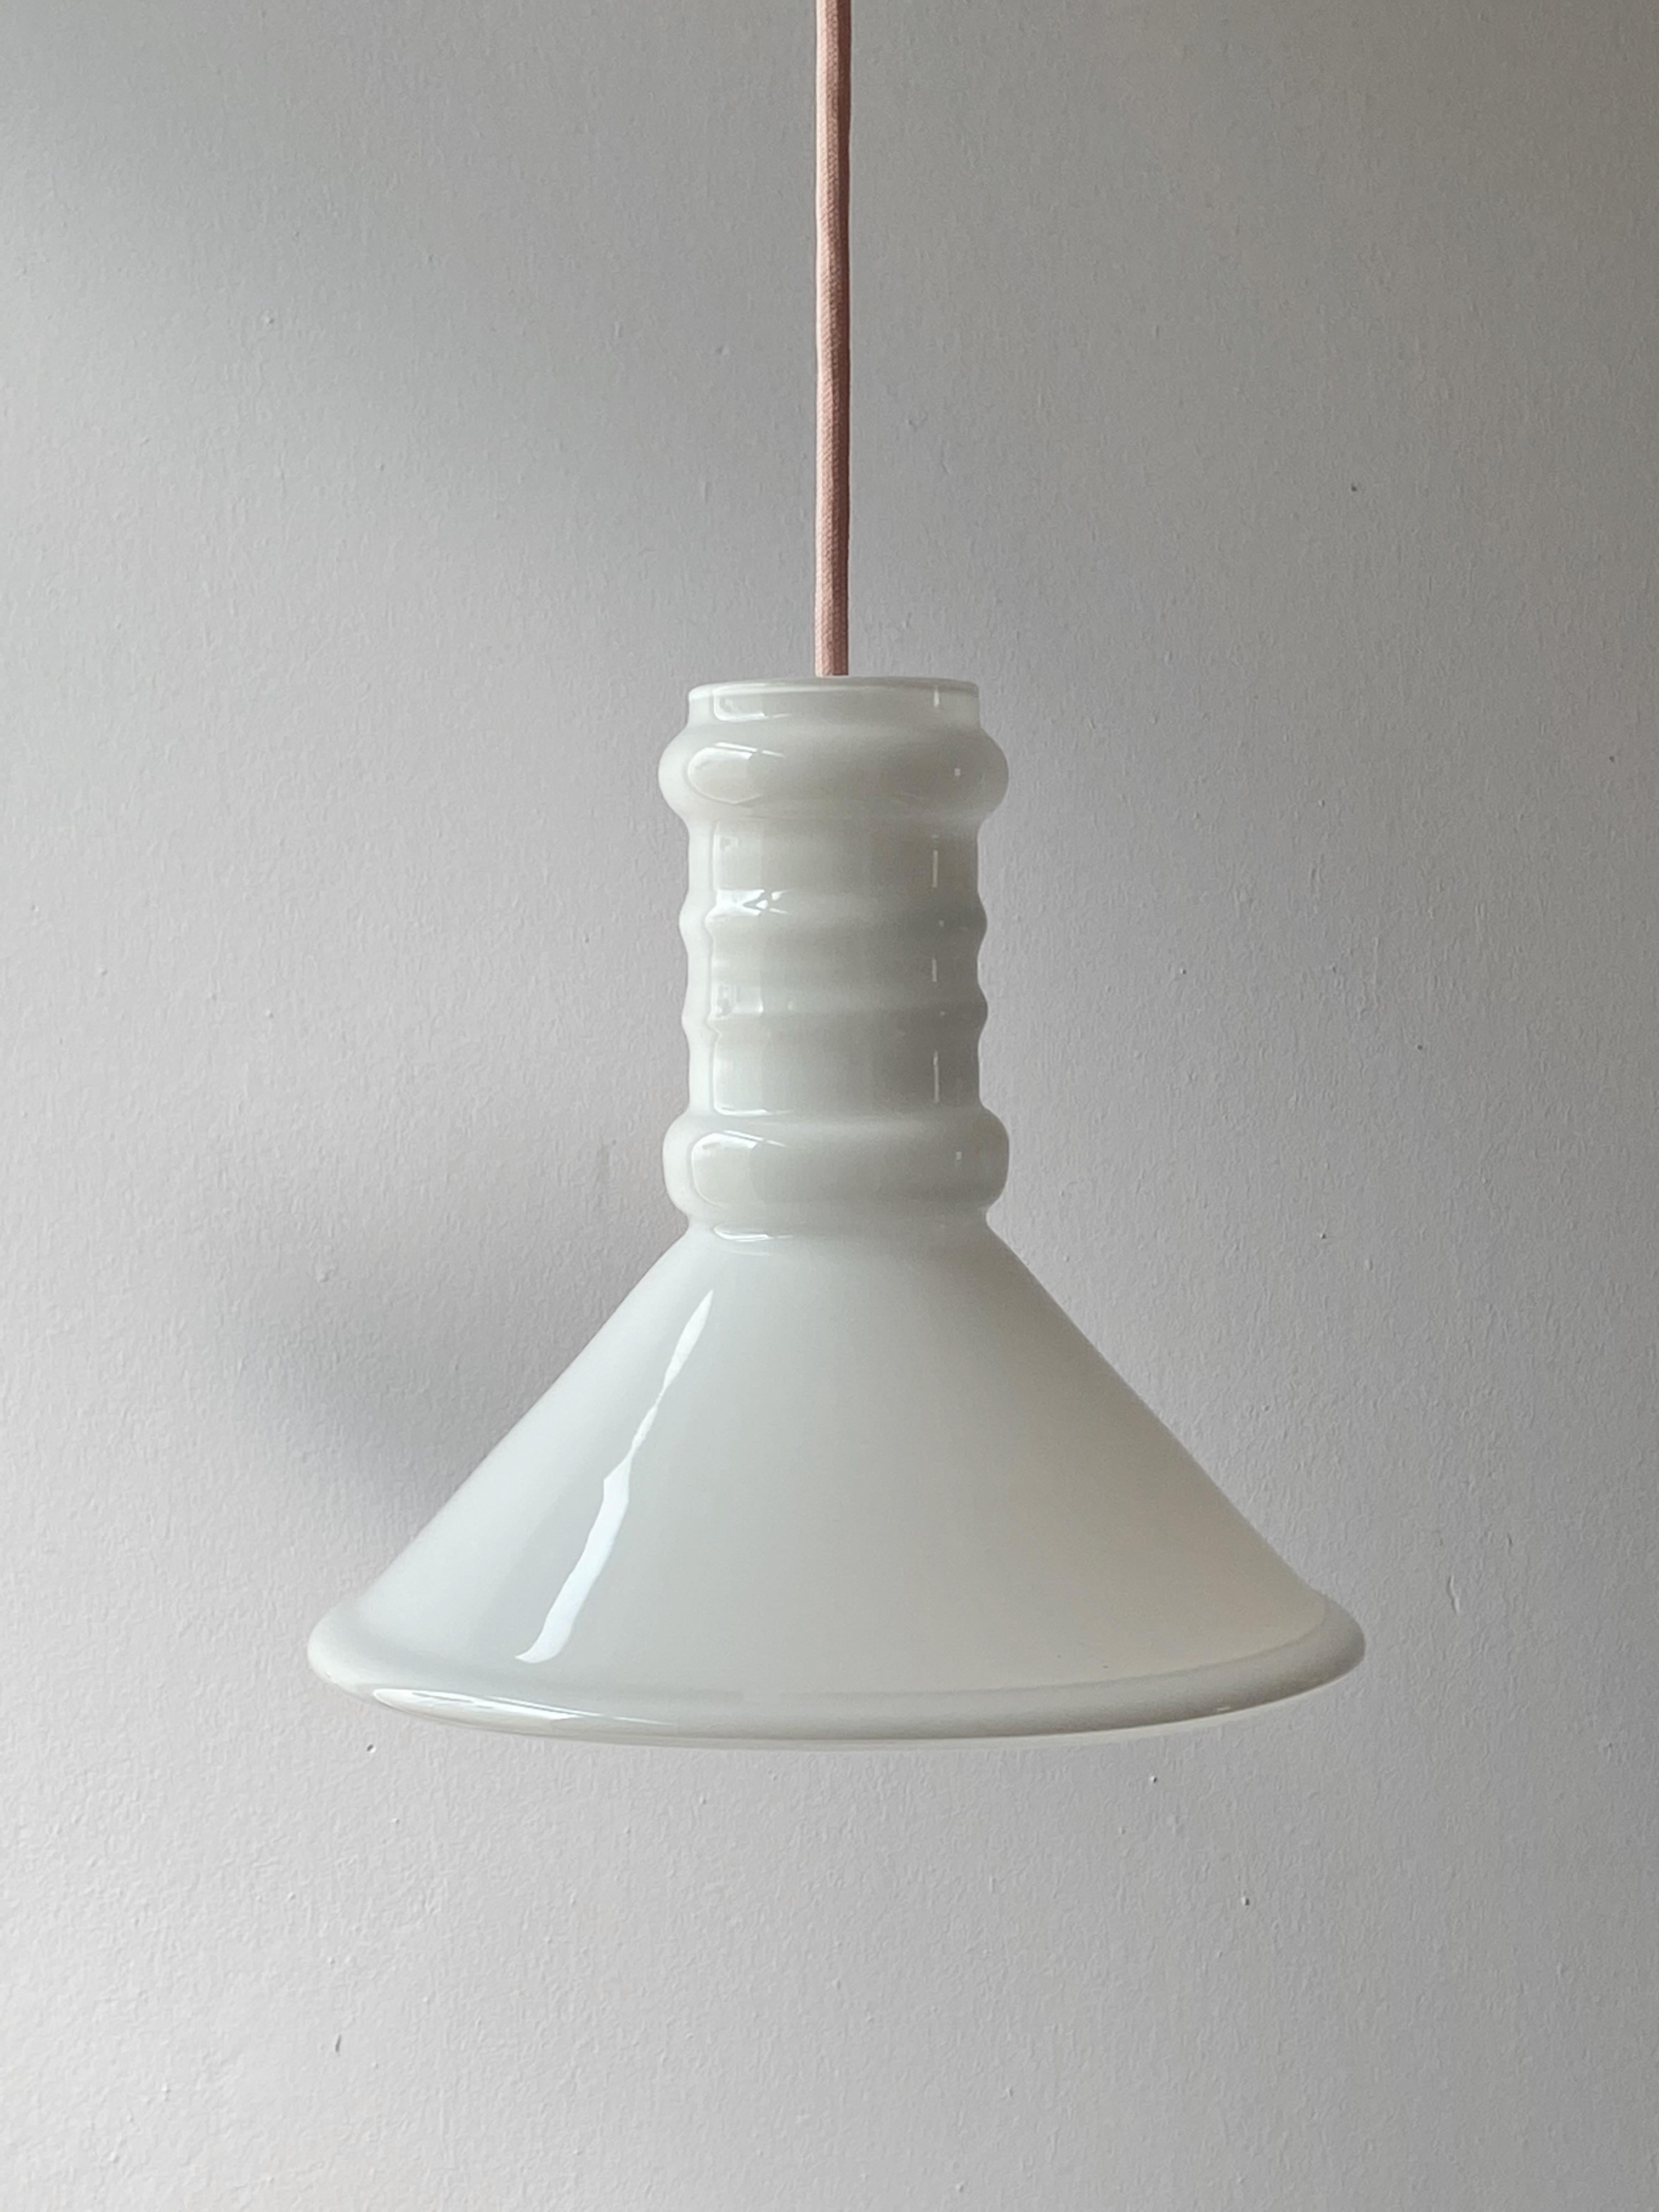 Sidse Werner Small Apotheker Pendant Lamp by Holmegaard, Denmark, 1980s 6